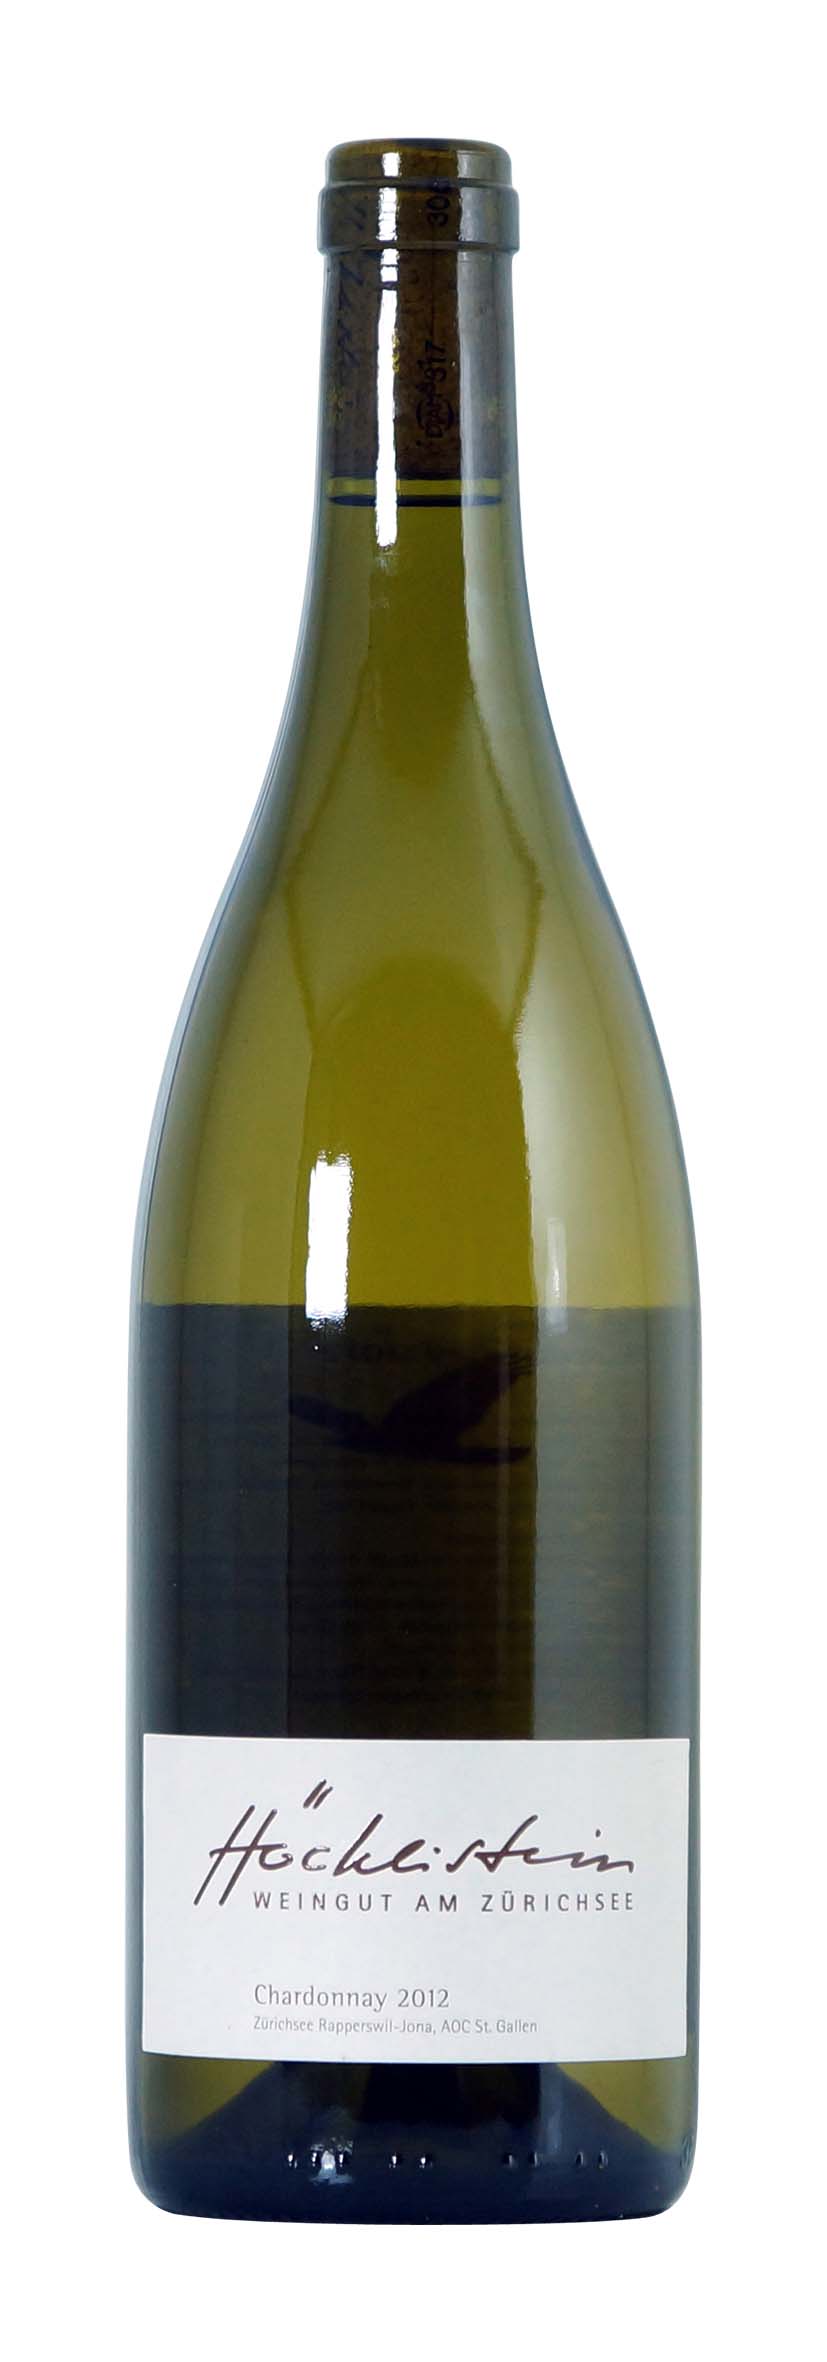 St. Gallen AOC Chardonnay 2012